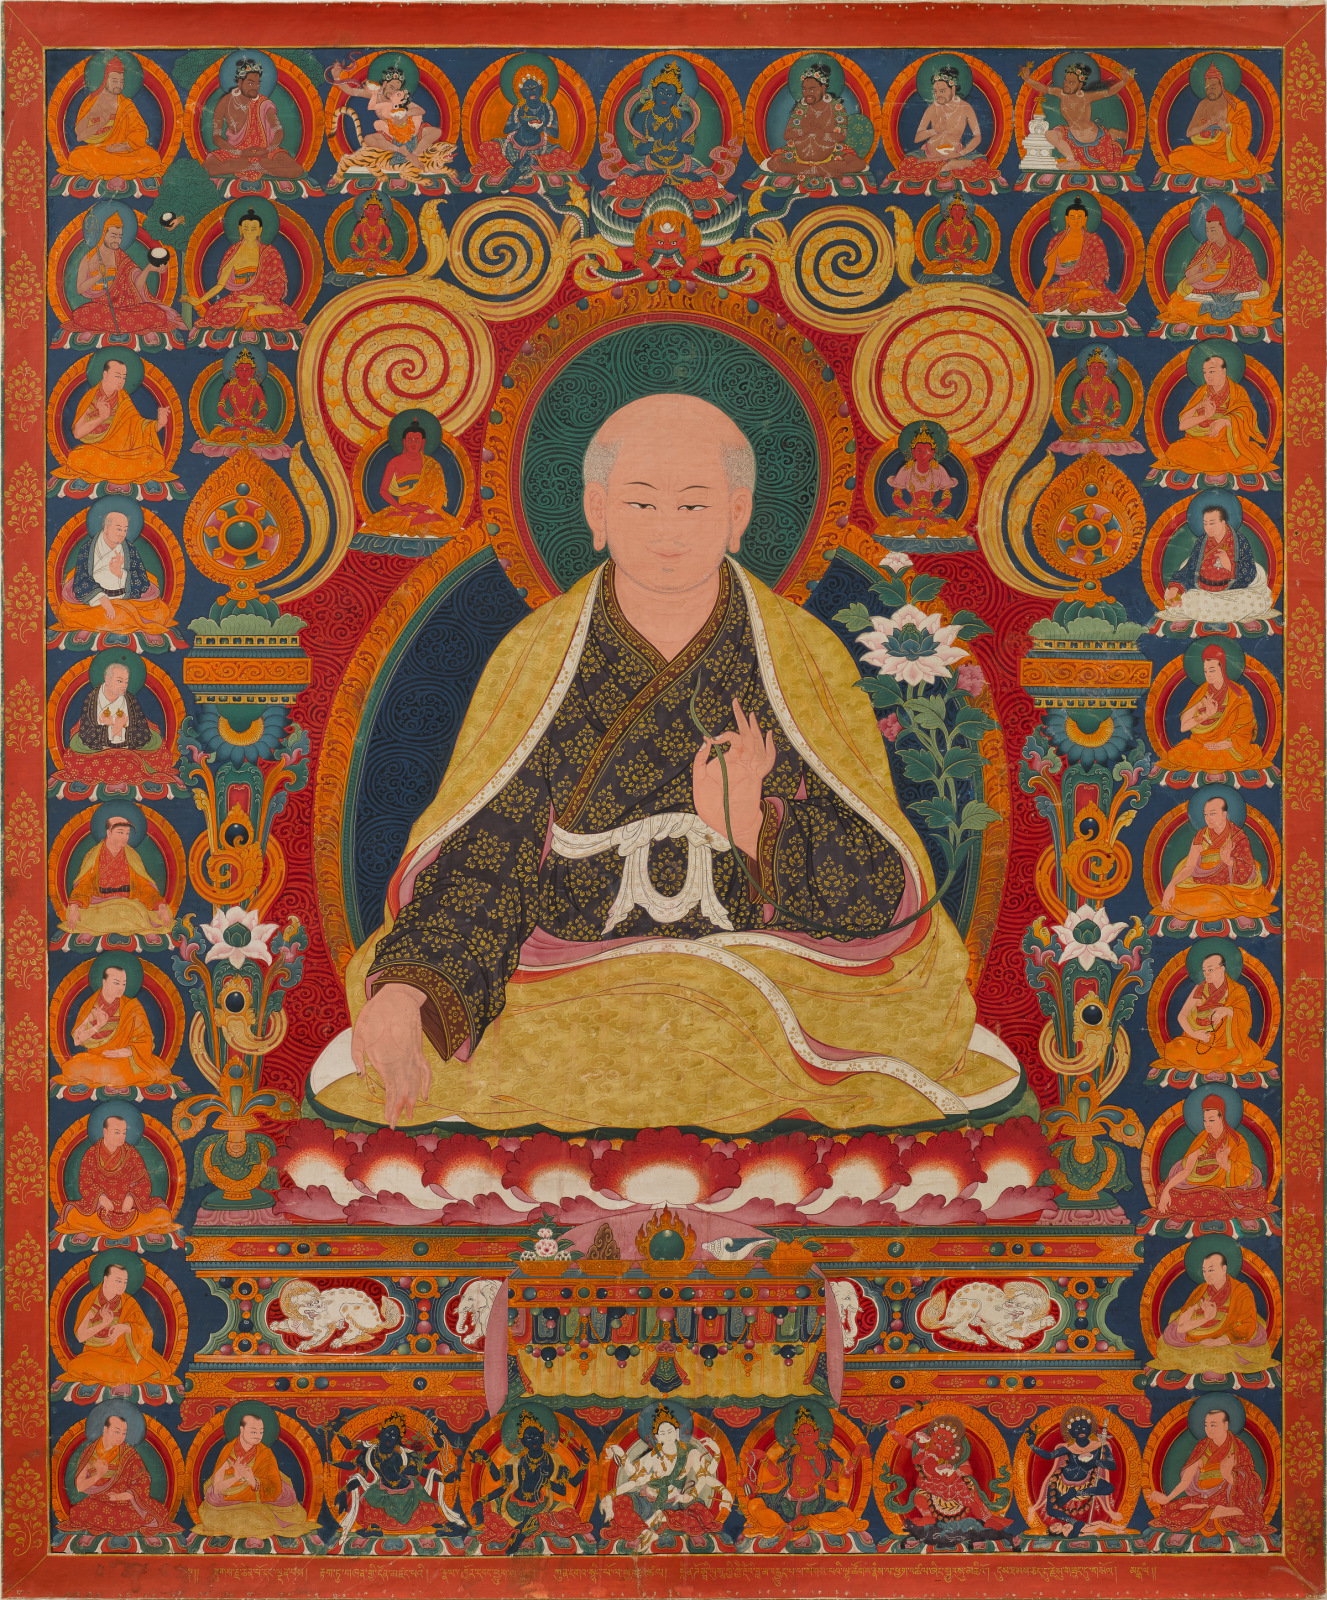 Timetan painting of Sachen Kunga Nyingpo (1092-1158), one of the Five Superiors of the Tibetan Sakya order